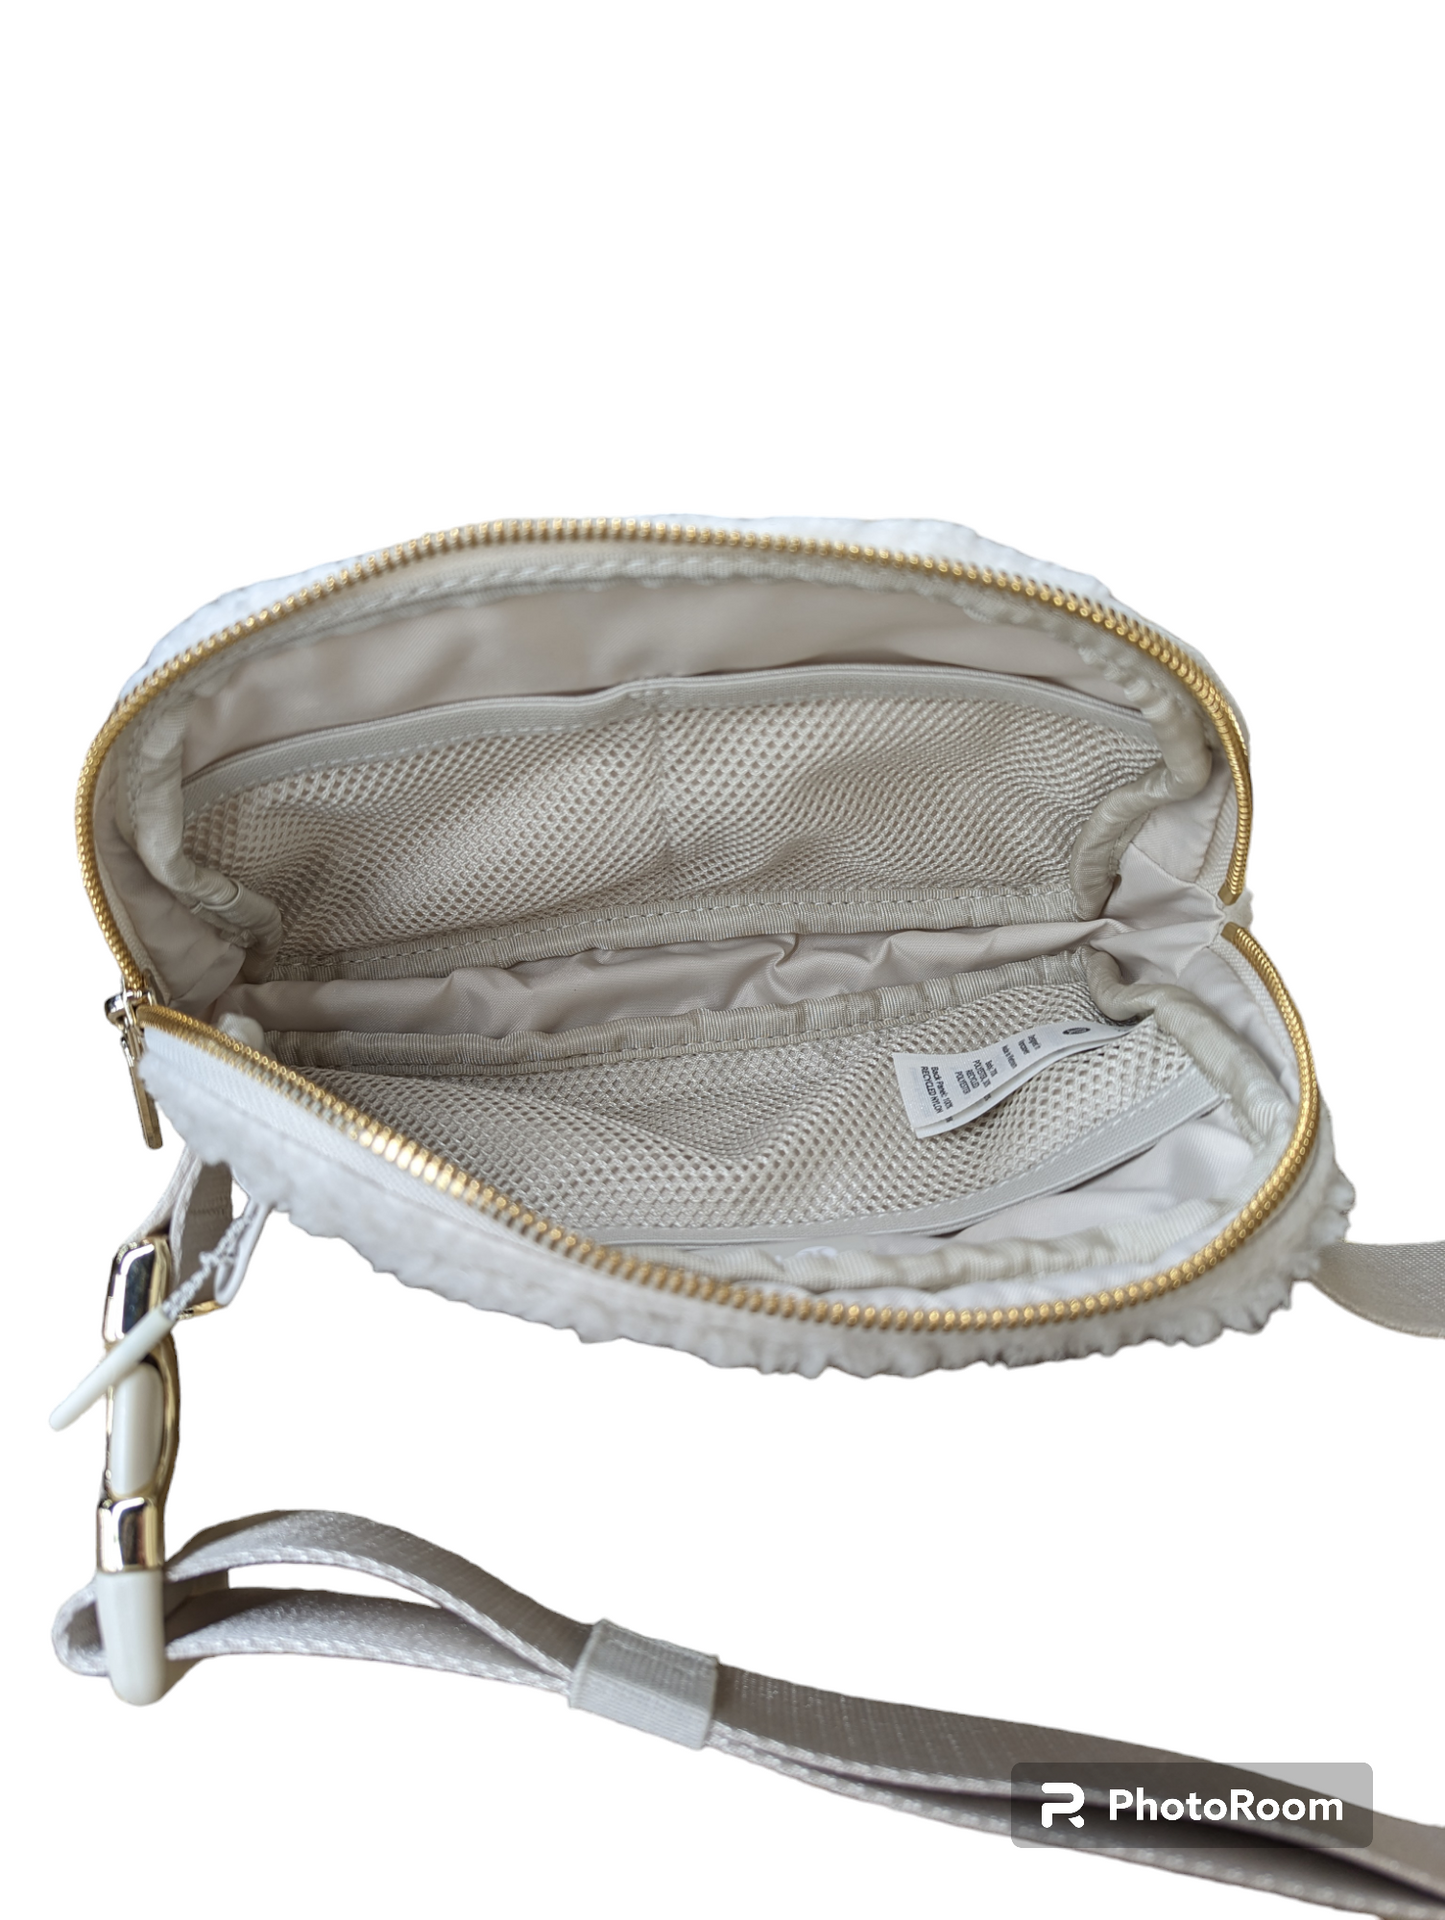 Belt Bag By Lululemon  Size: Medium